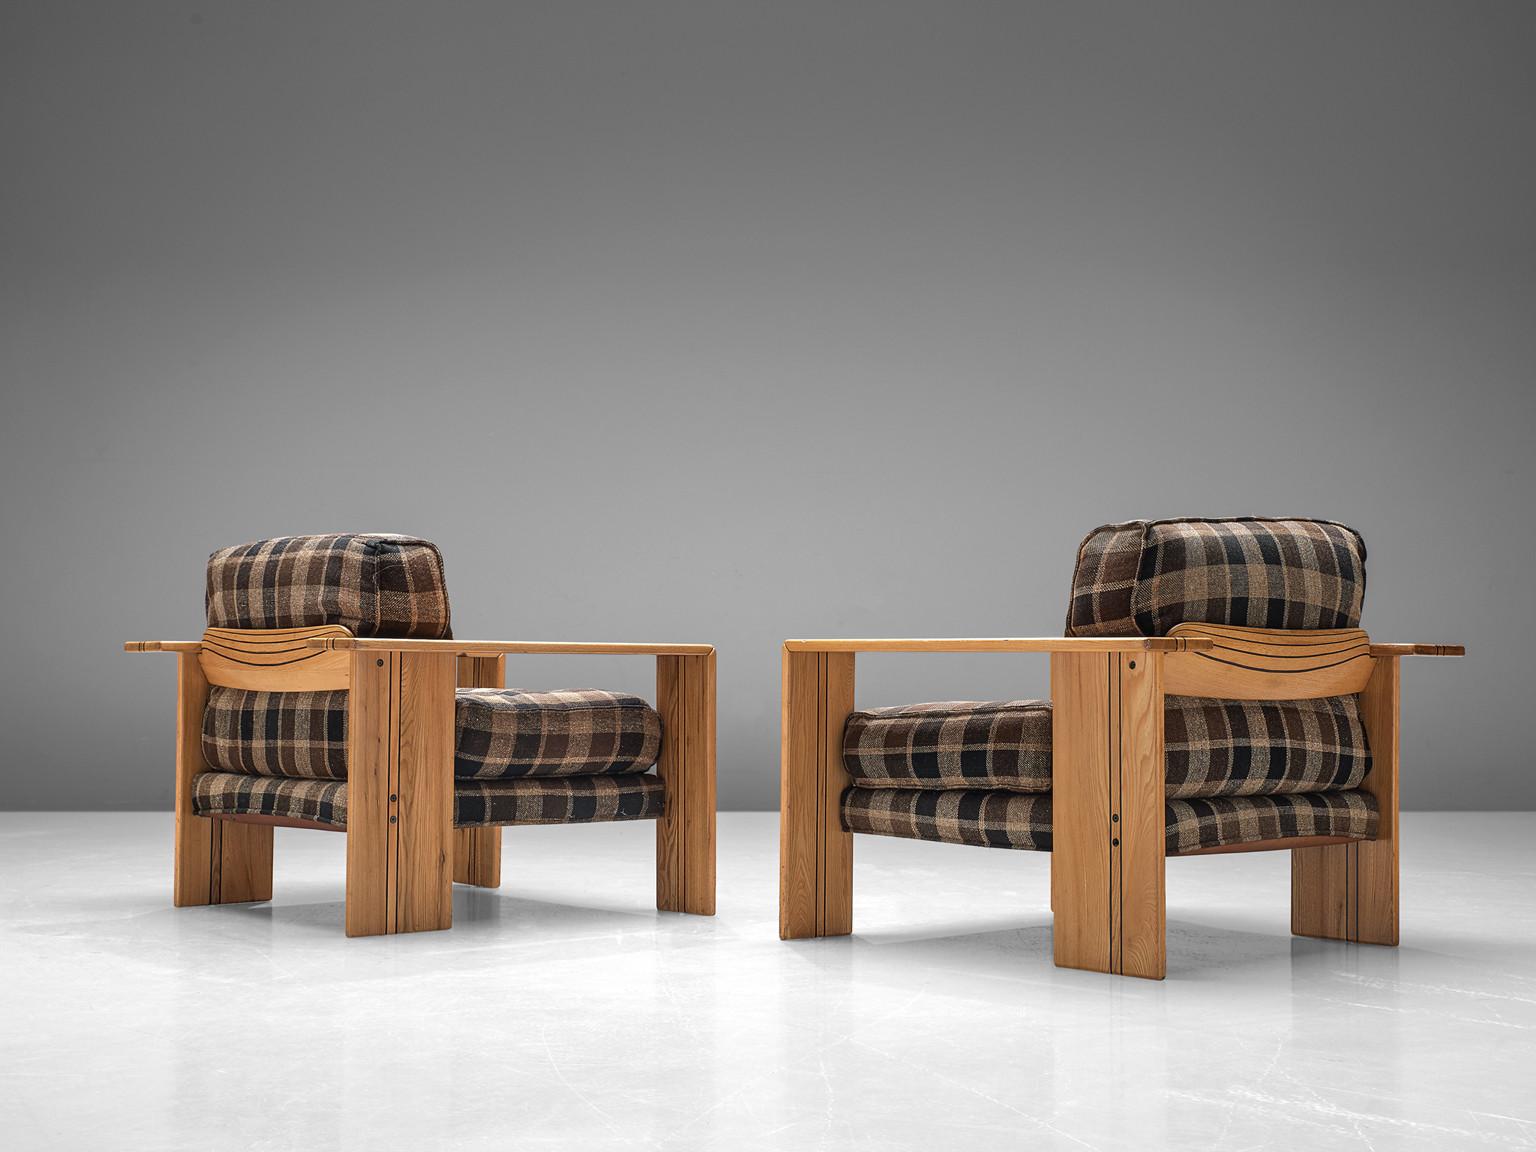 Afra & Tobia Scarpa for Maxalto, pair of 'Artona' lounge chairs, ash, checkered fabric, Italy, 1975/1979

Pair of cubic ‘Artona’ lounge chairs by Italian designer couple Afra and Tobia Scarpa. These chairs show absolute stunning craftsmanship.